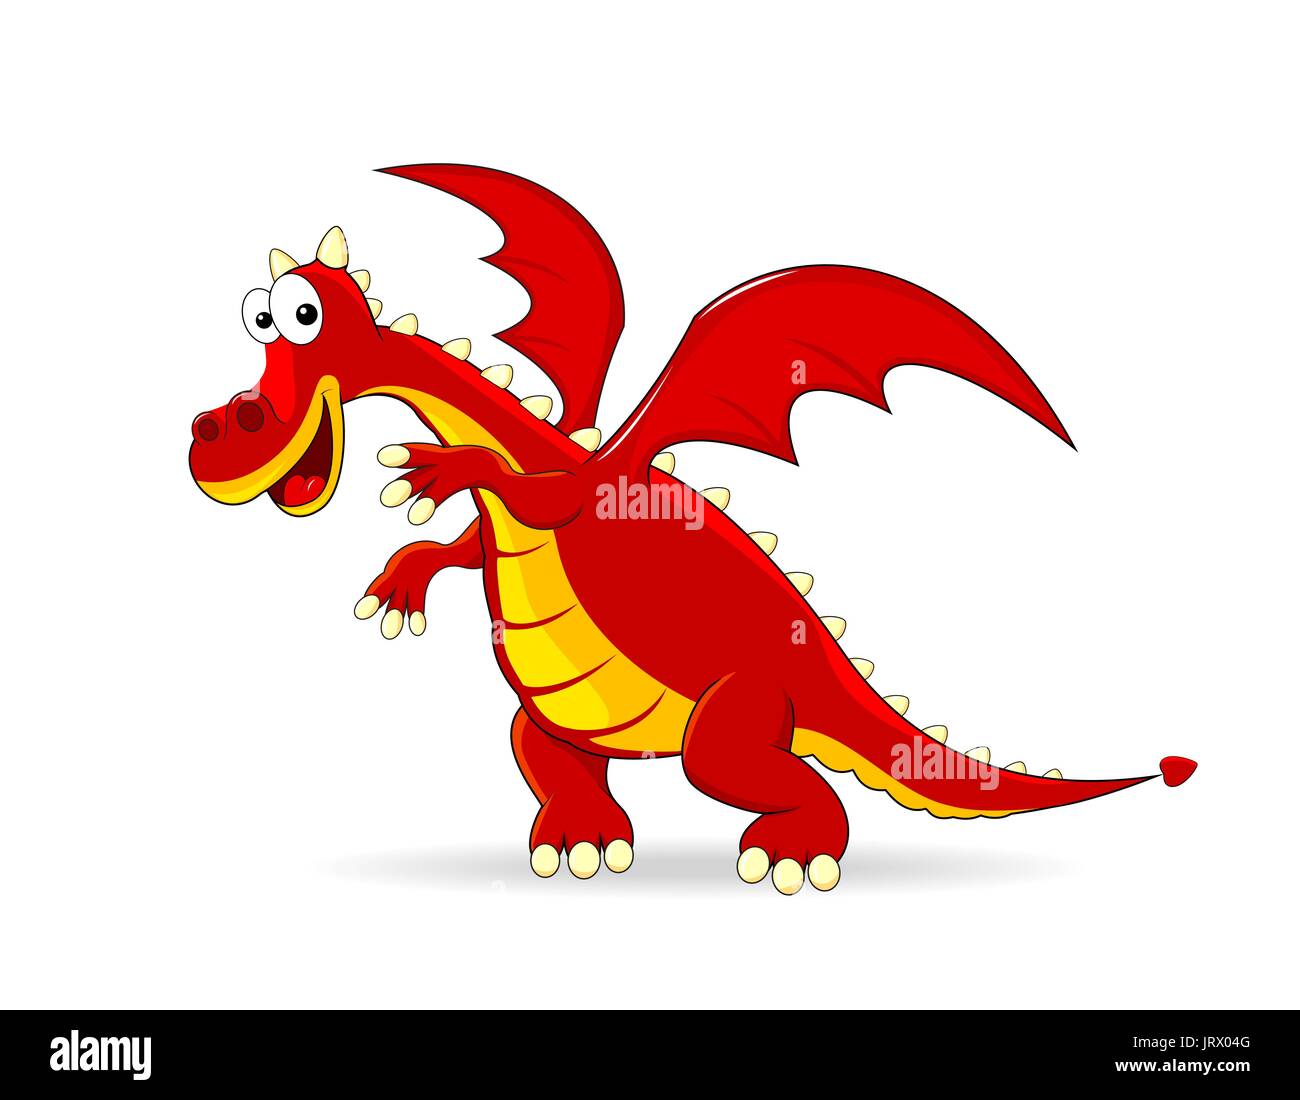 Dragon cartoon hi-res stock photography and images - Alamy